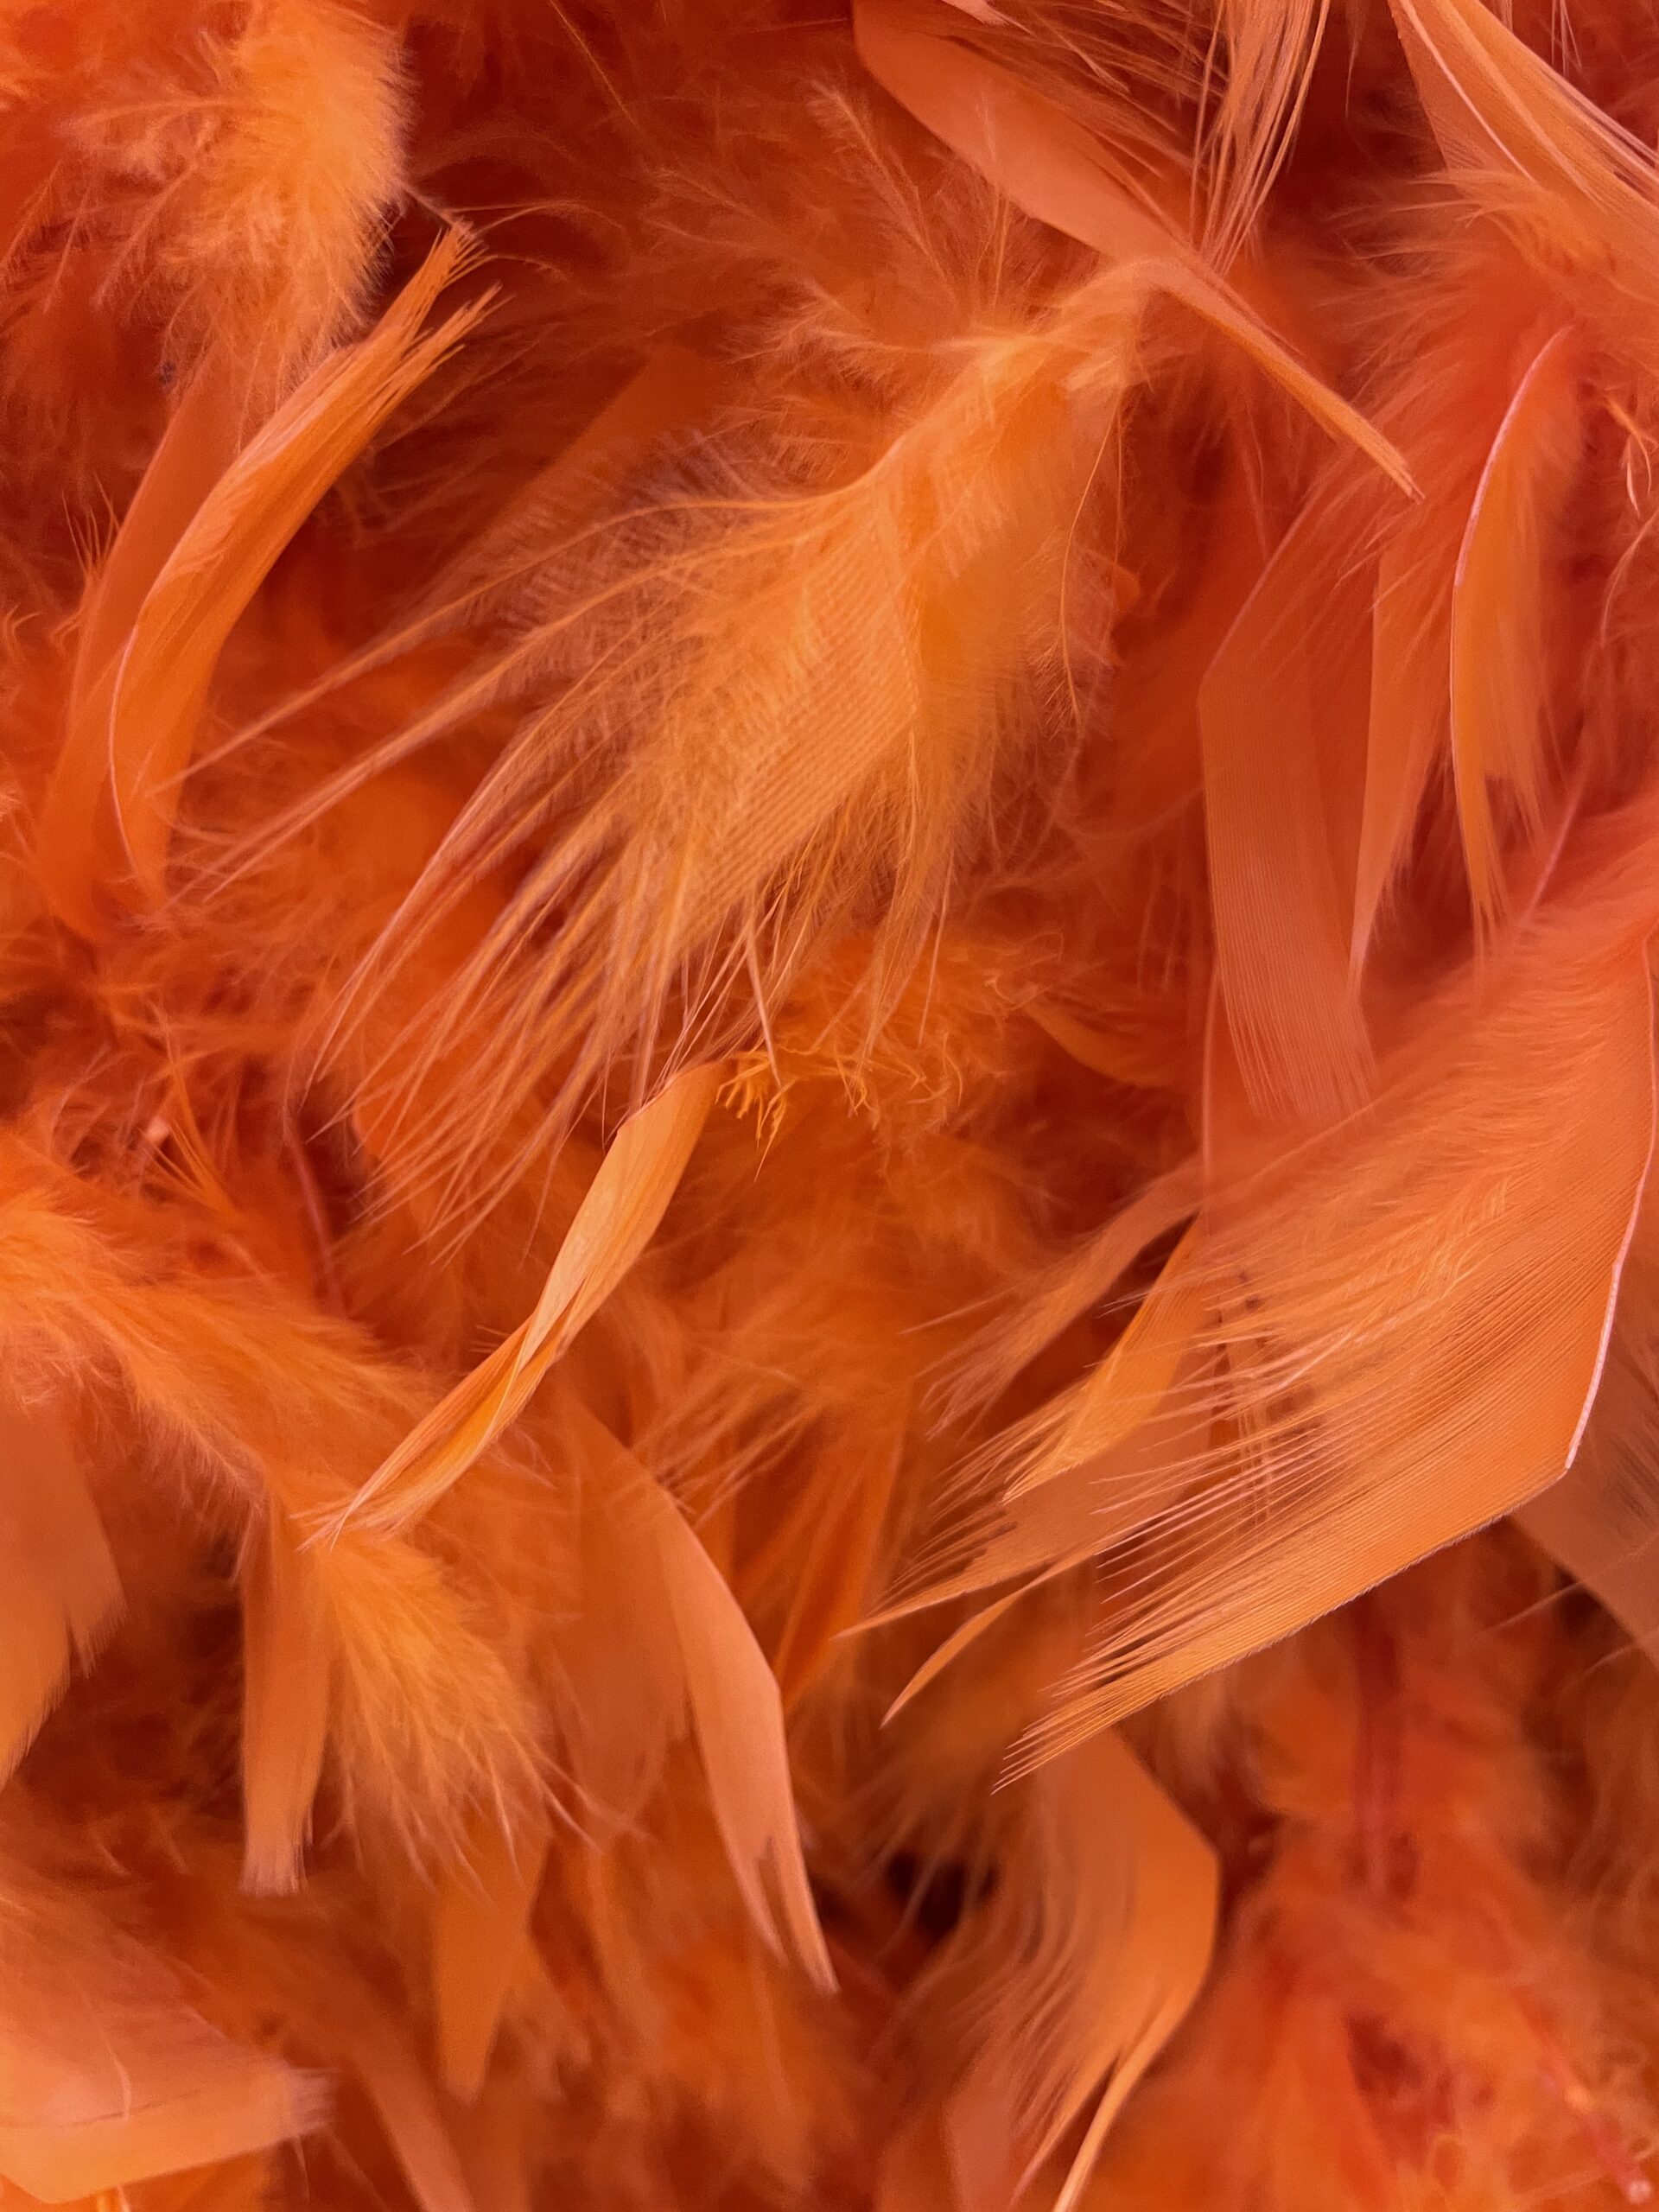 Featured image for “Feather Boa Orange”